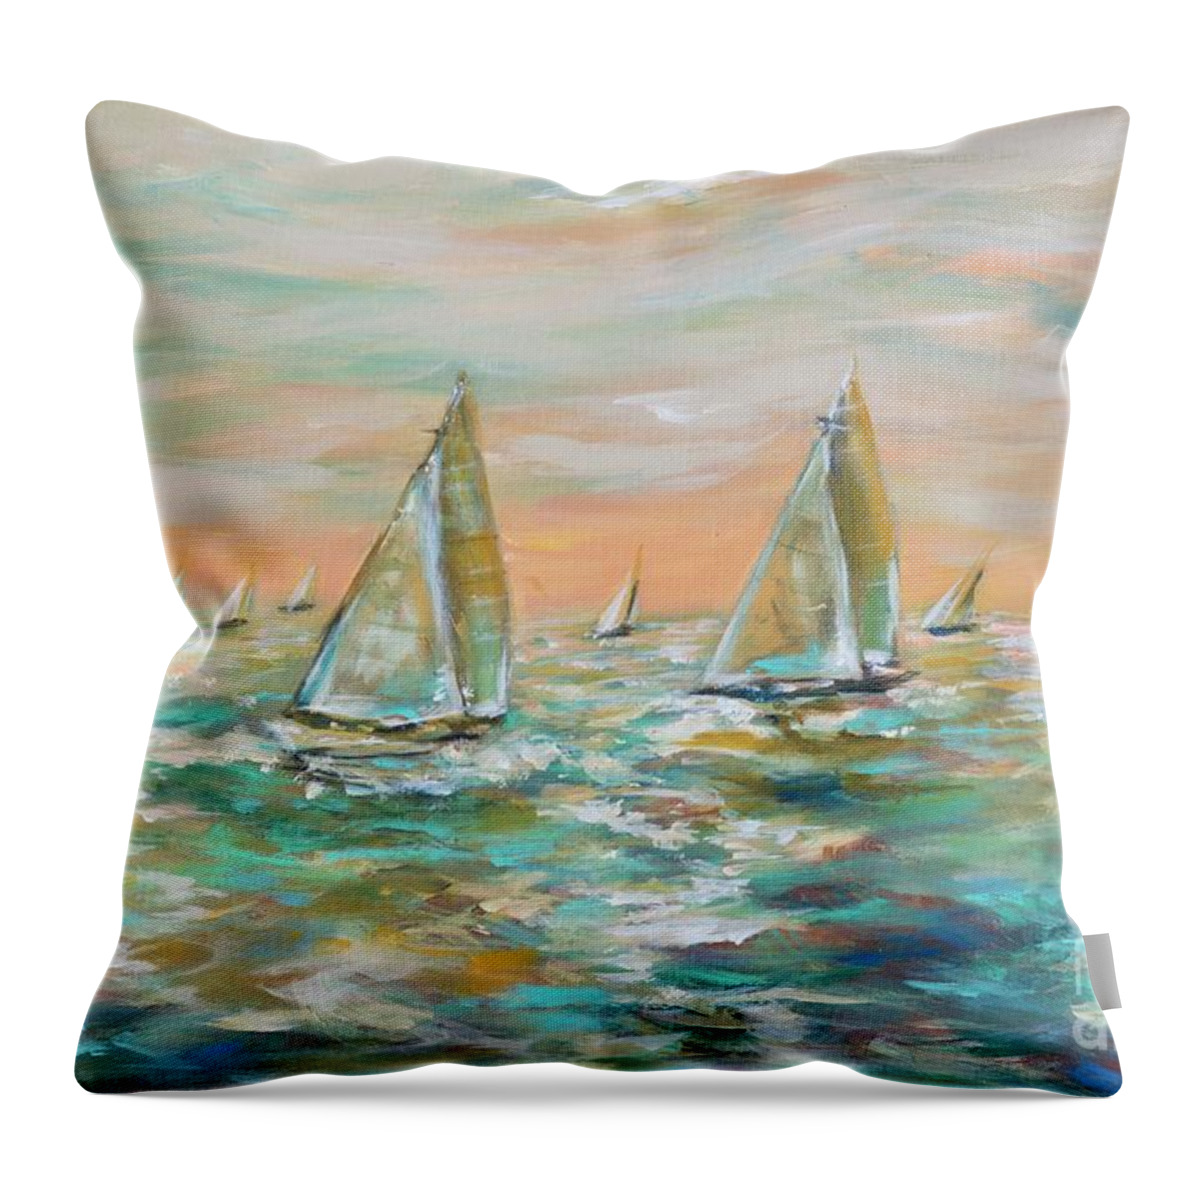 Ocean Throw Pillow featuring the painting Ocean Regatta by Linda Olsen